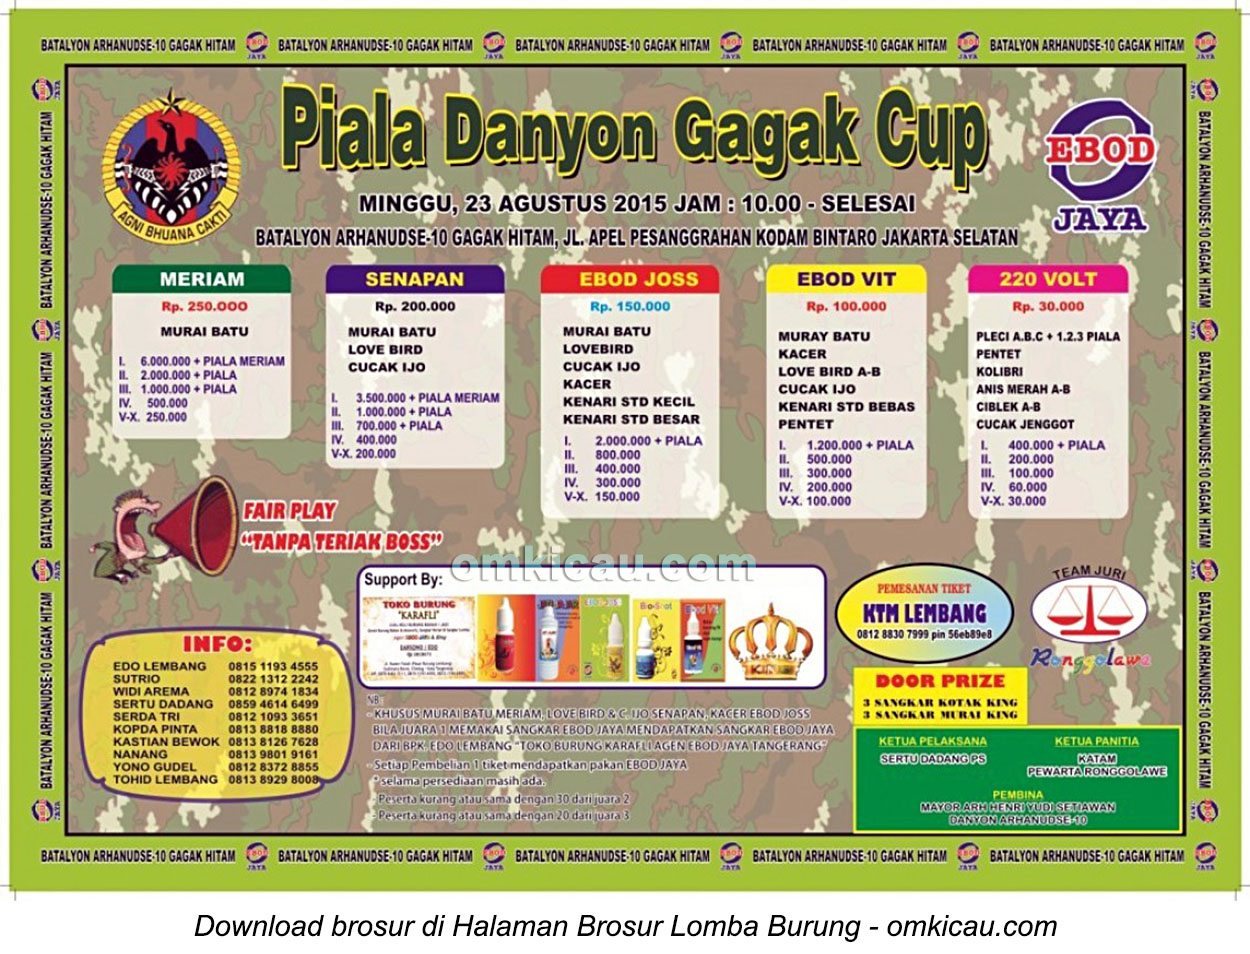 Brosur Lomba Burung Berkicau Piala Danyon Gagak Cup, Jakarta Selatan, 23 Agustus 2015